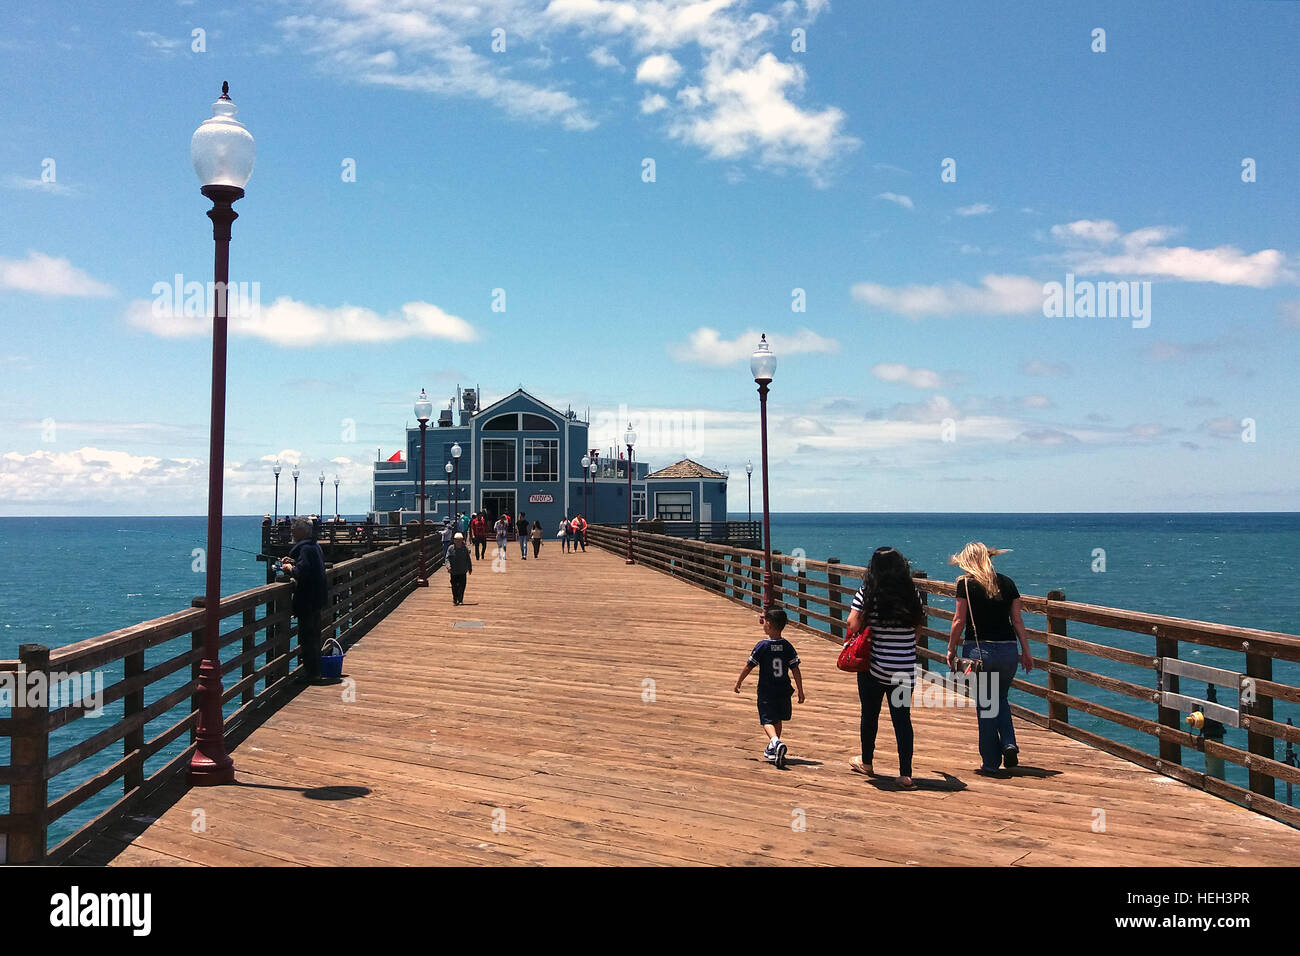 Oceanside pier, Oceanside, California, USA Banque D'Images